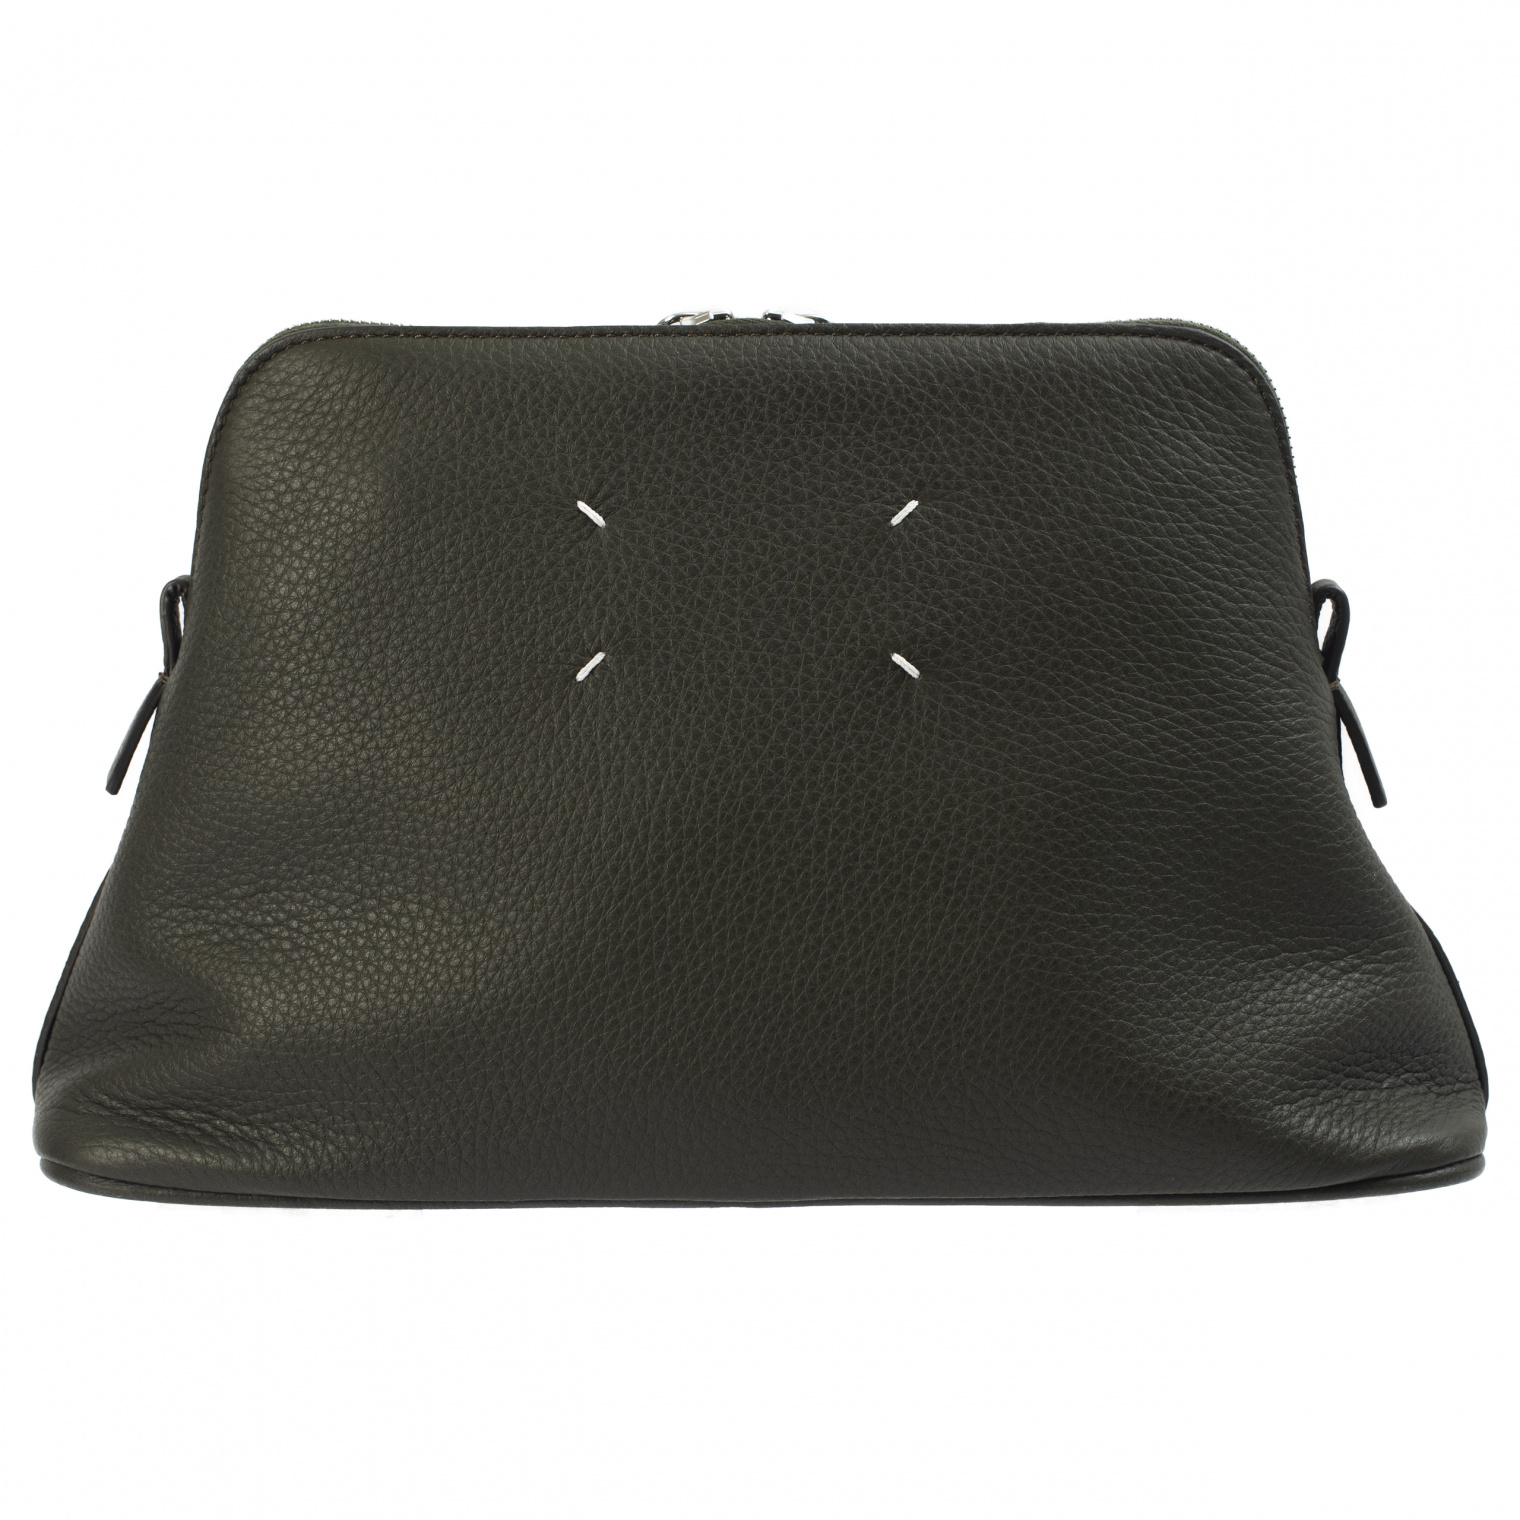 Maison Margiela 5AC leather shoulder bag in khaki